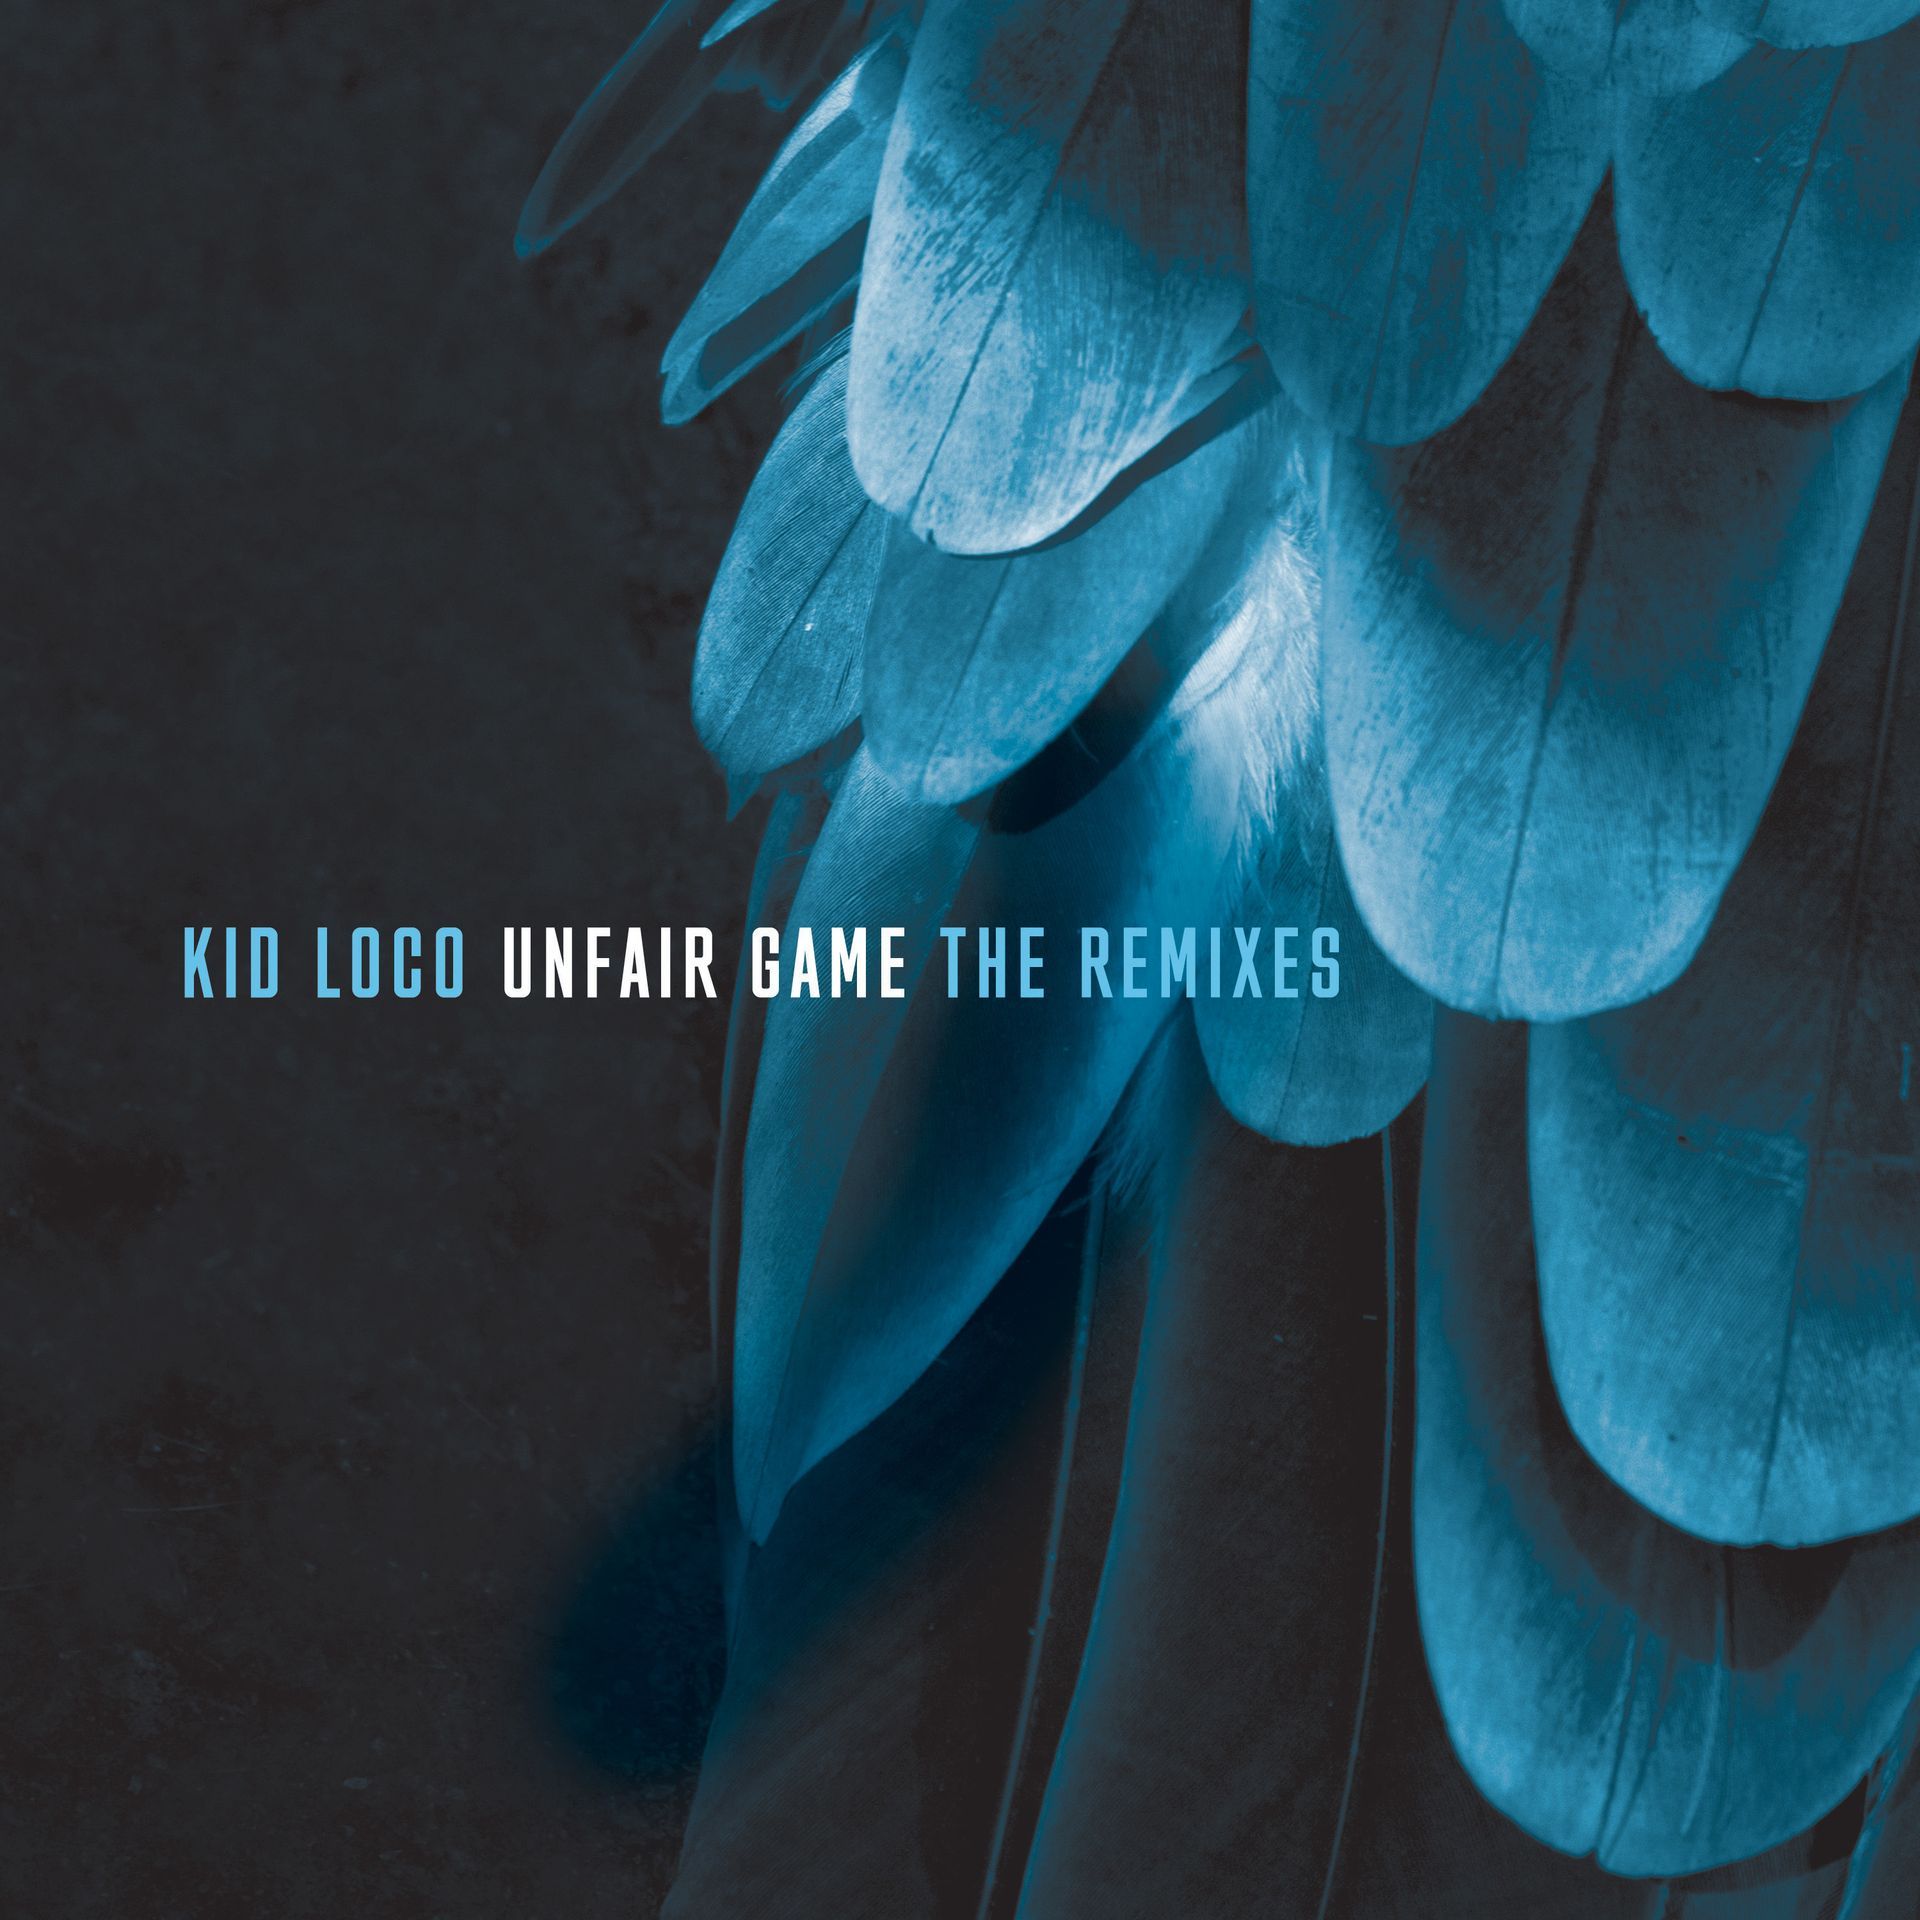 Unfair Game (The Remixes) album art